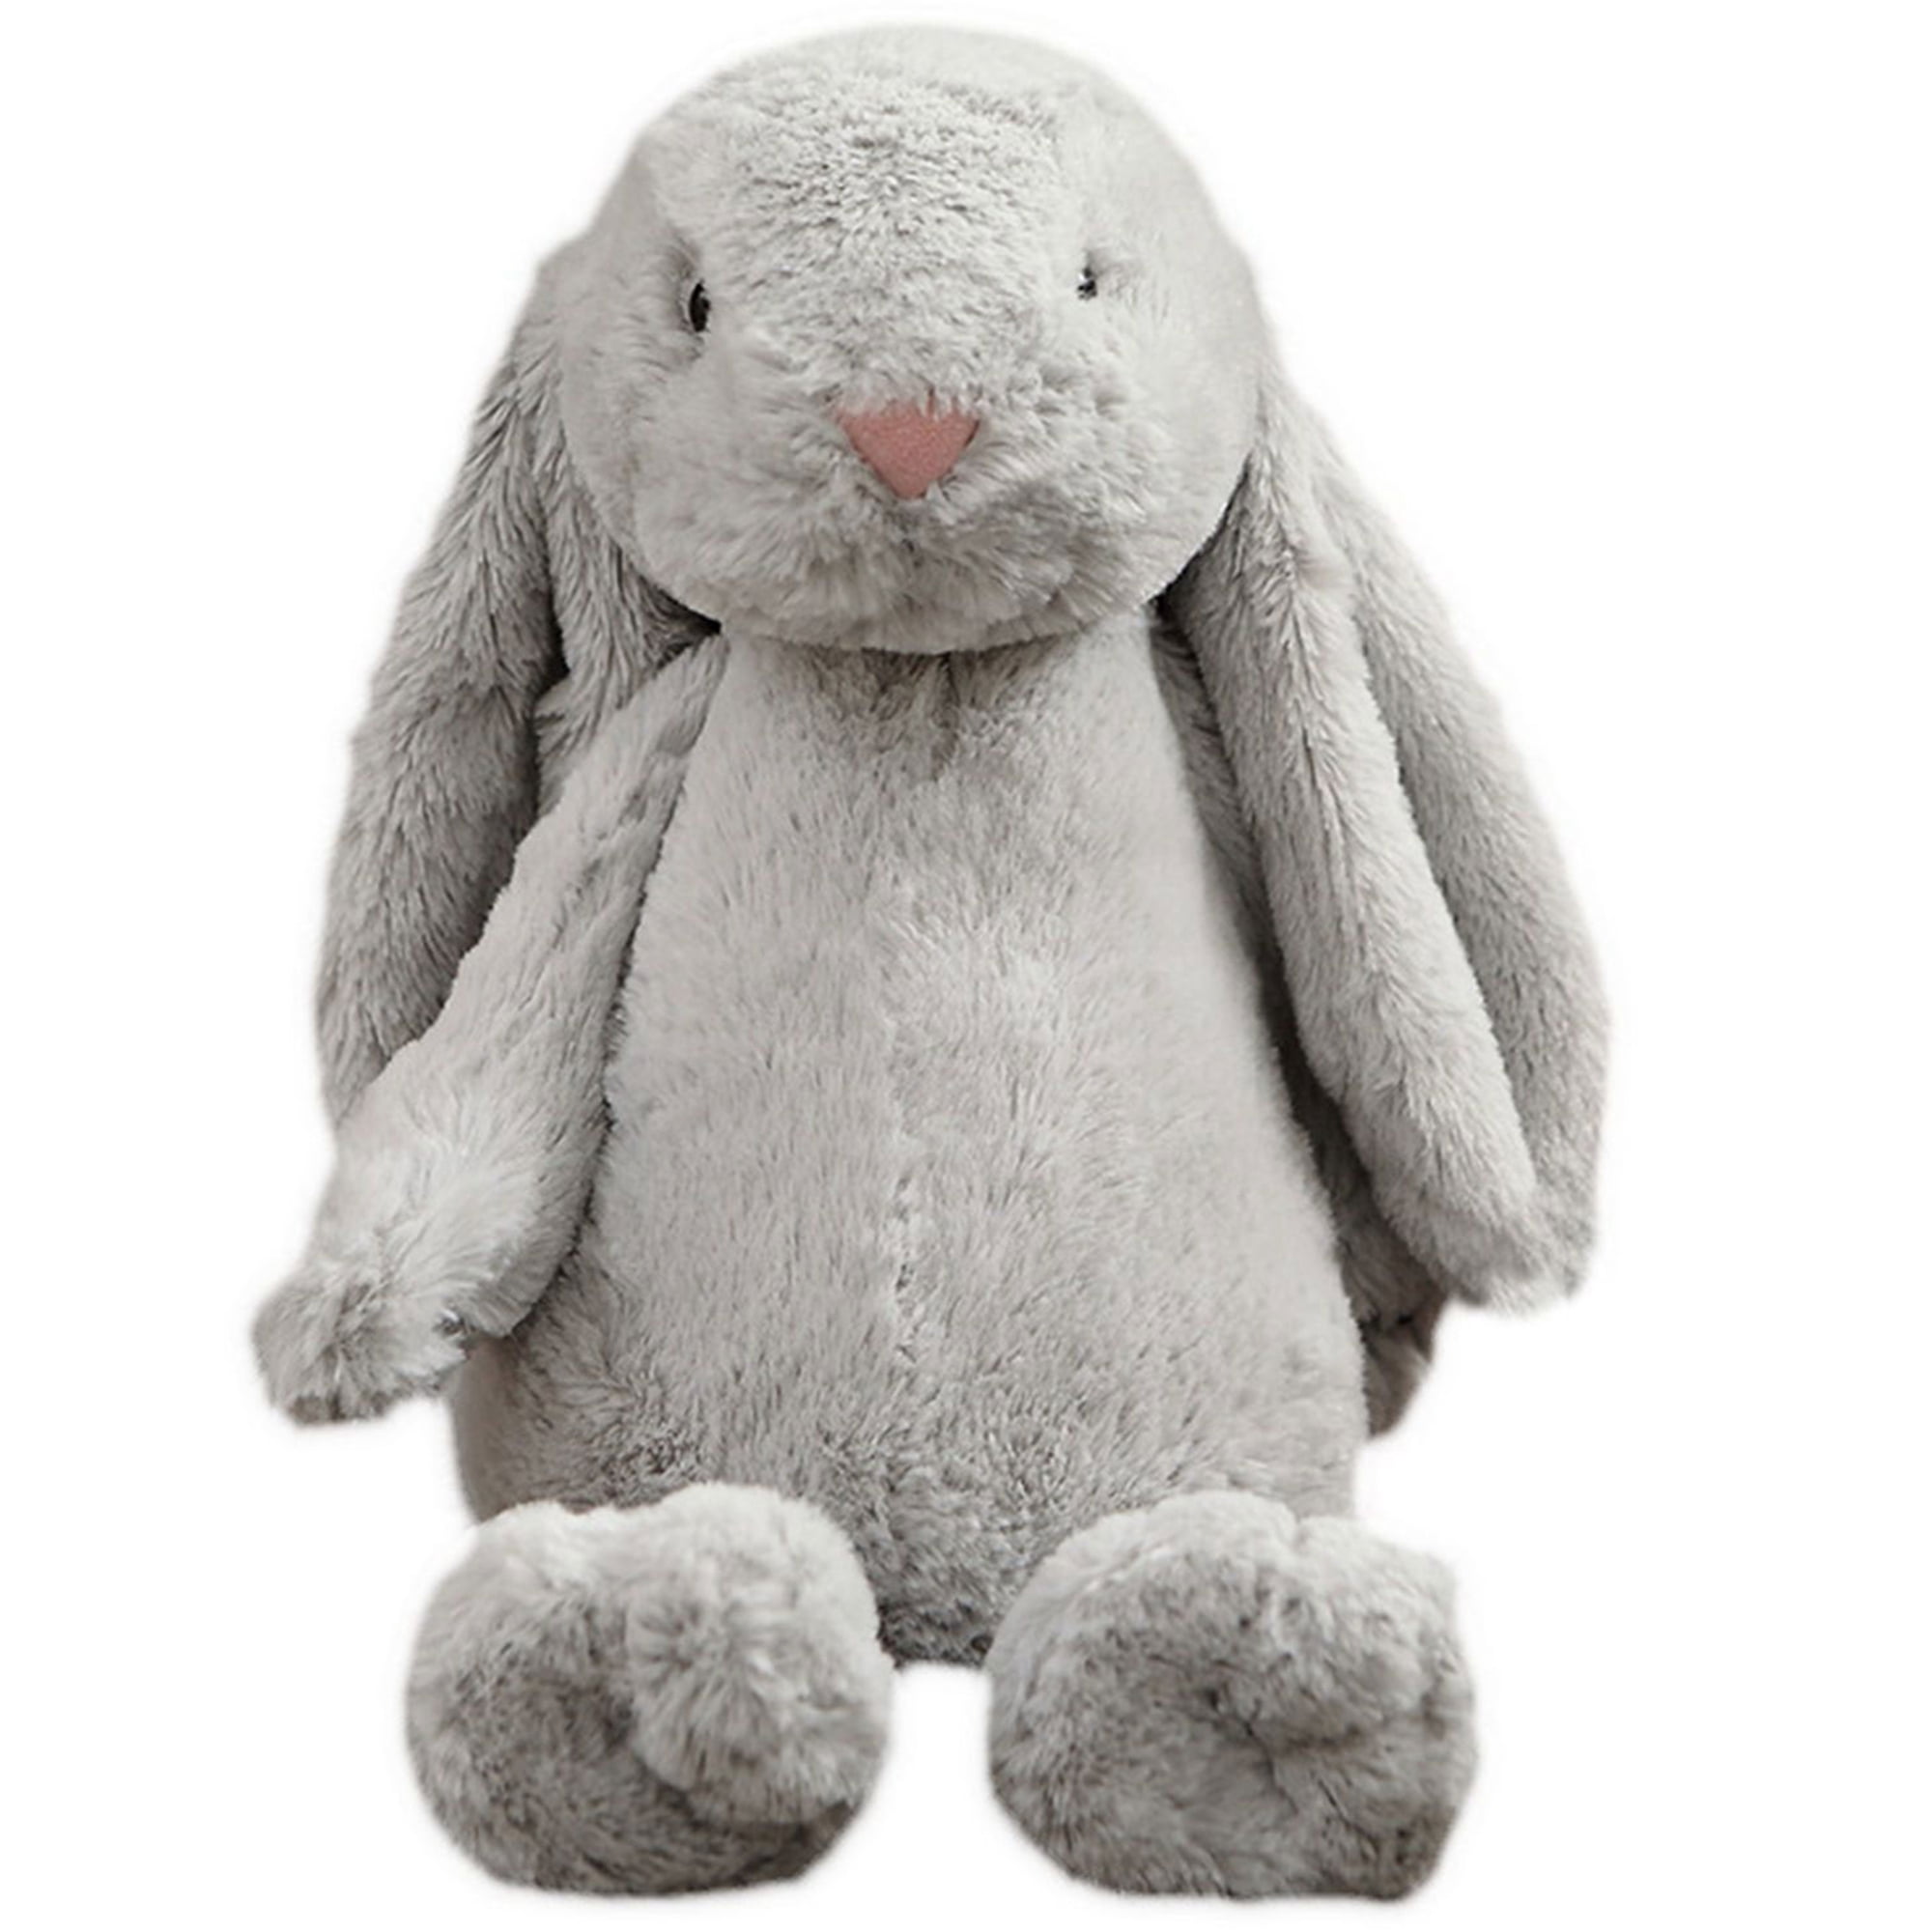 Plush Bunny Stuffed Animal Baby Rabbit Toys Dolls with Fluffy Soft Ears 